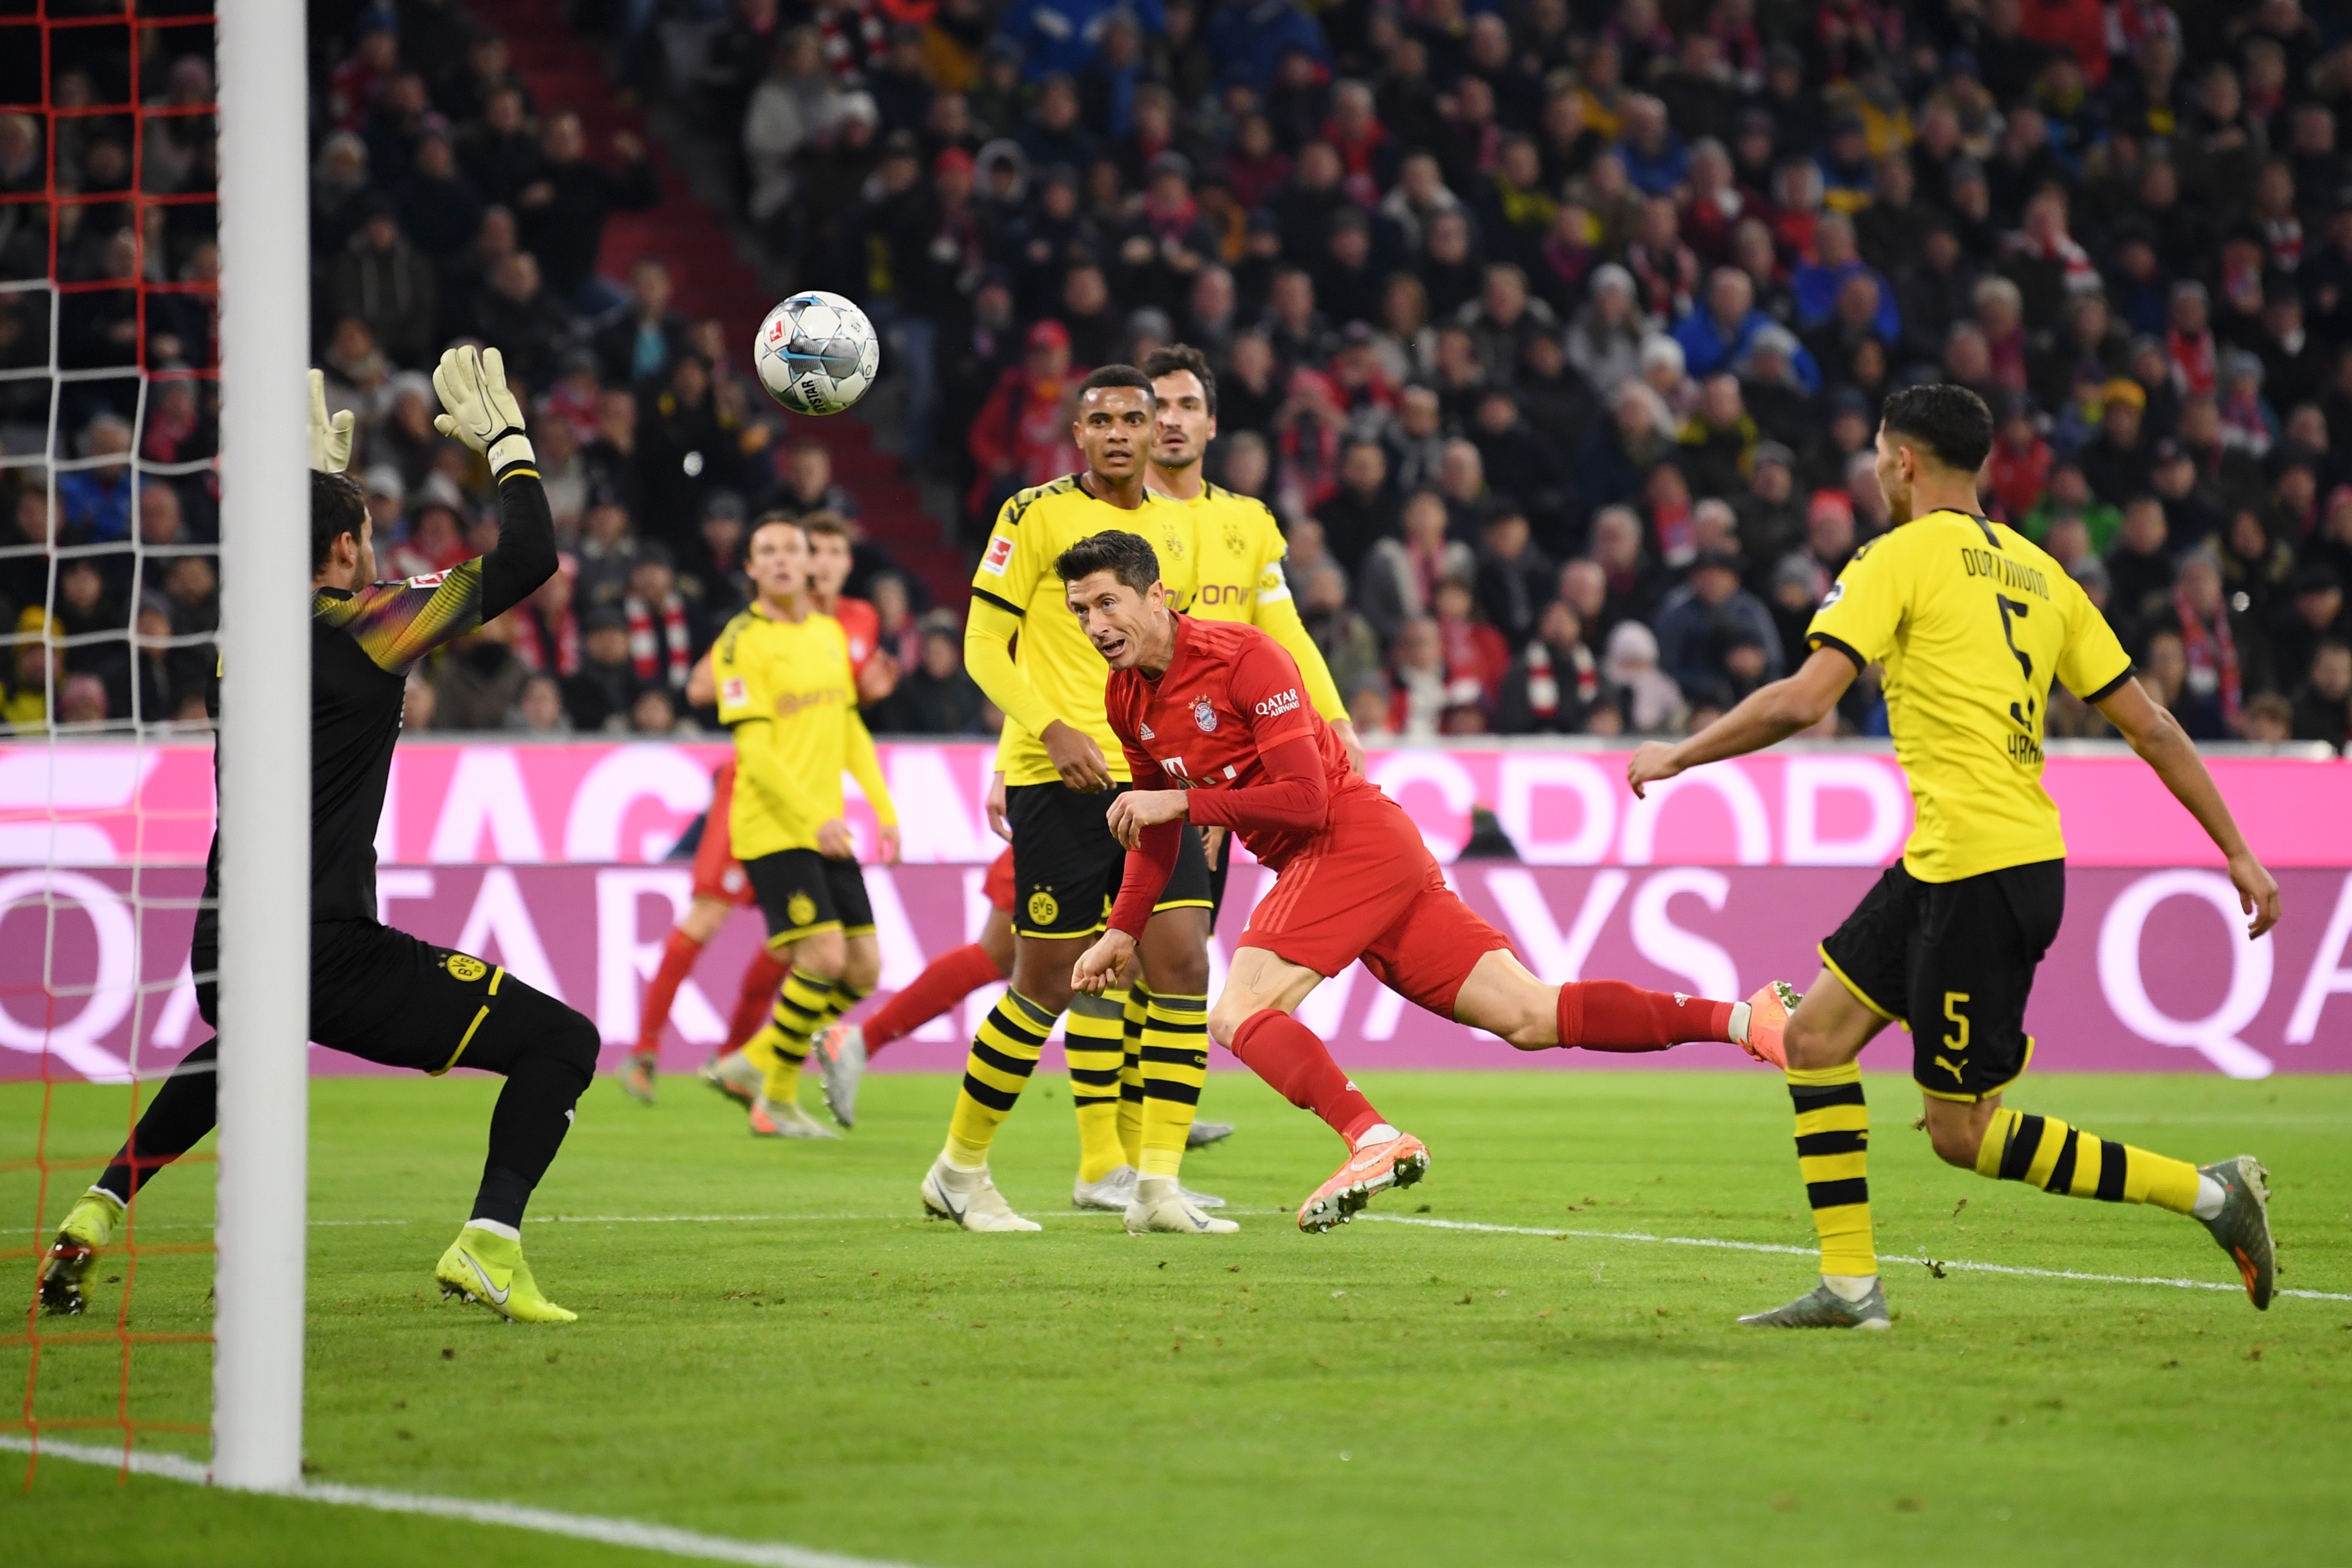 LIVE VIDEO Dortmund - Bayern, de la 19:30, pe Digi Sport 1 și Digi 4K. Echipele de start: Haaland și Lewandowski sunt titulari